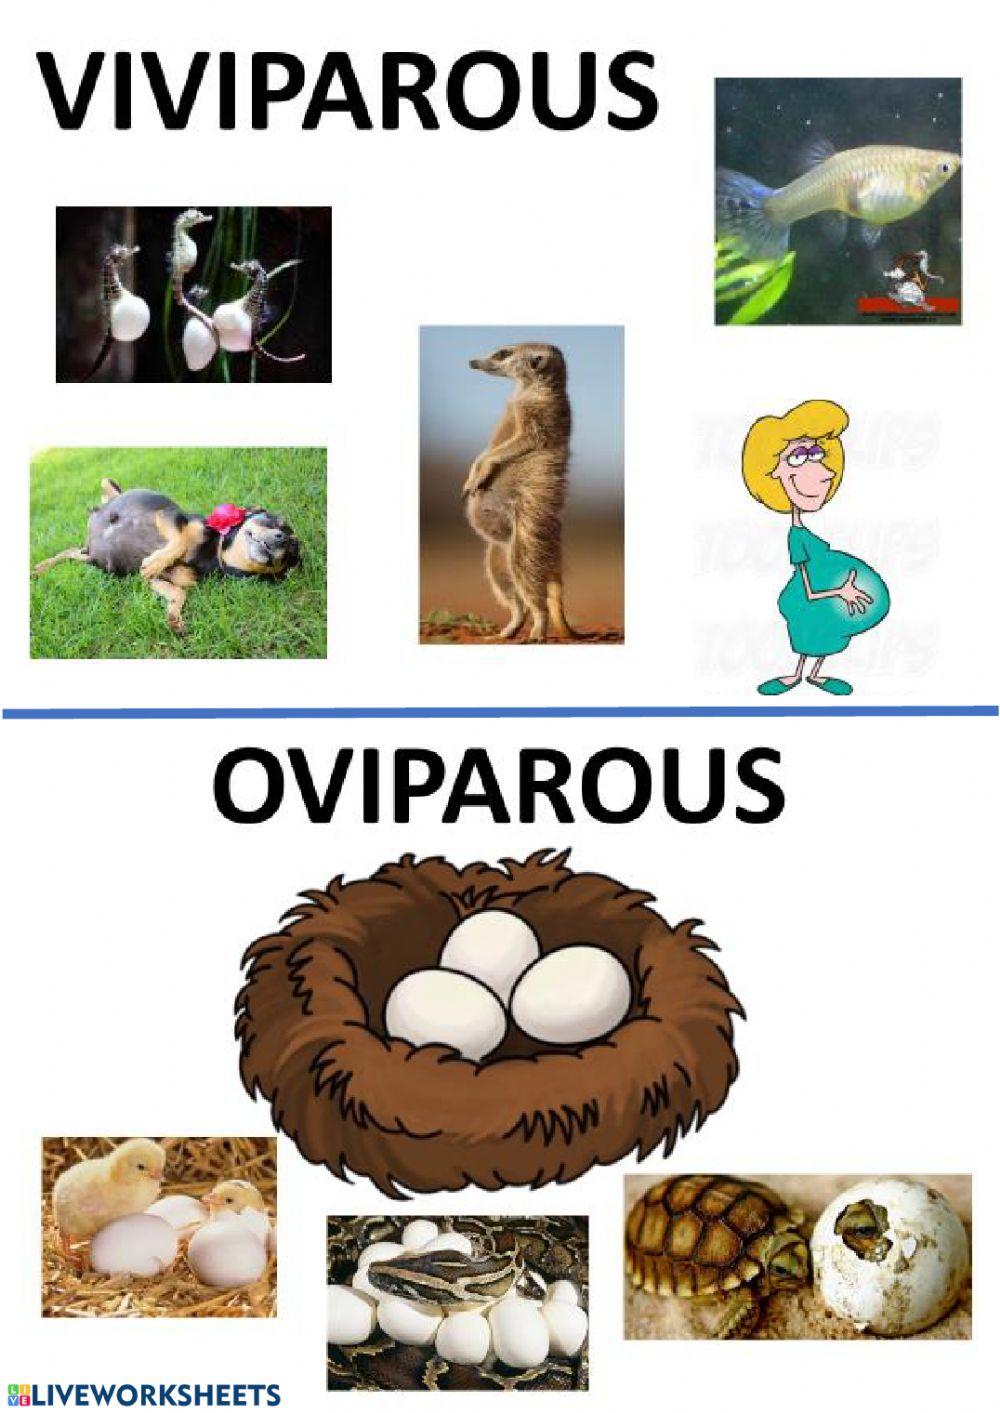 Viviparous, oviparous